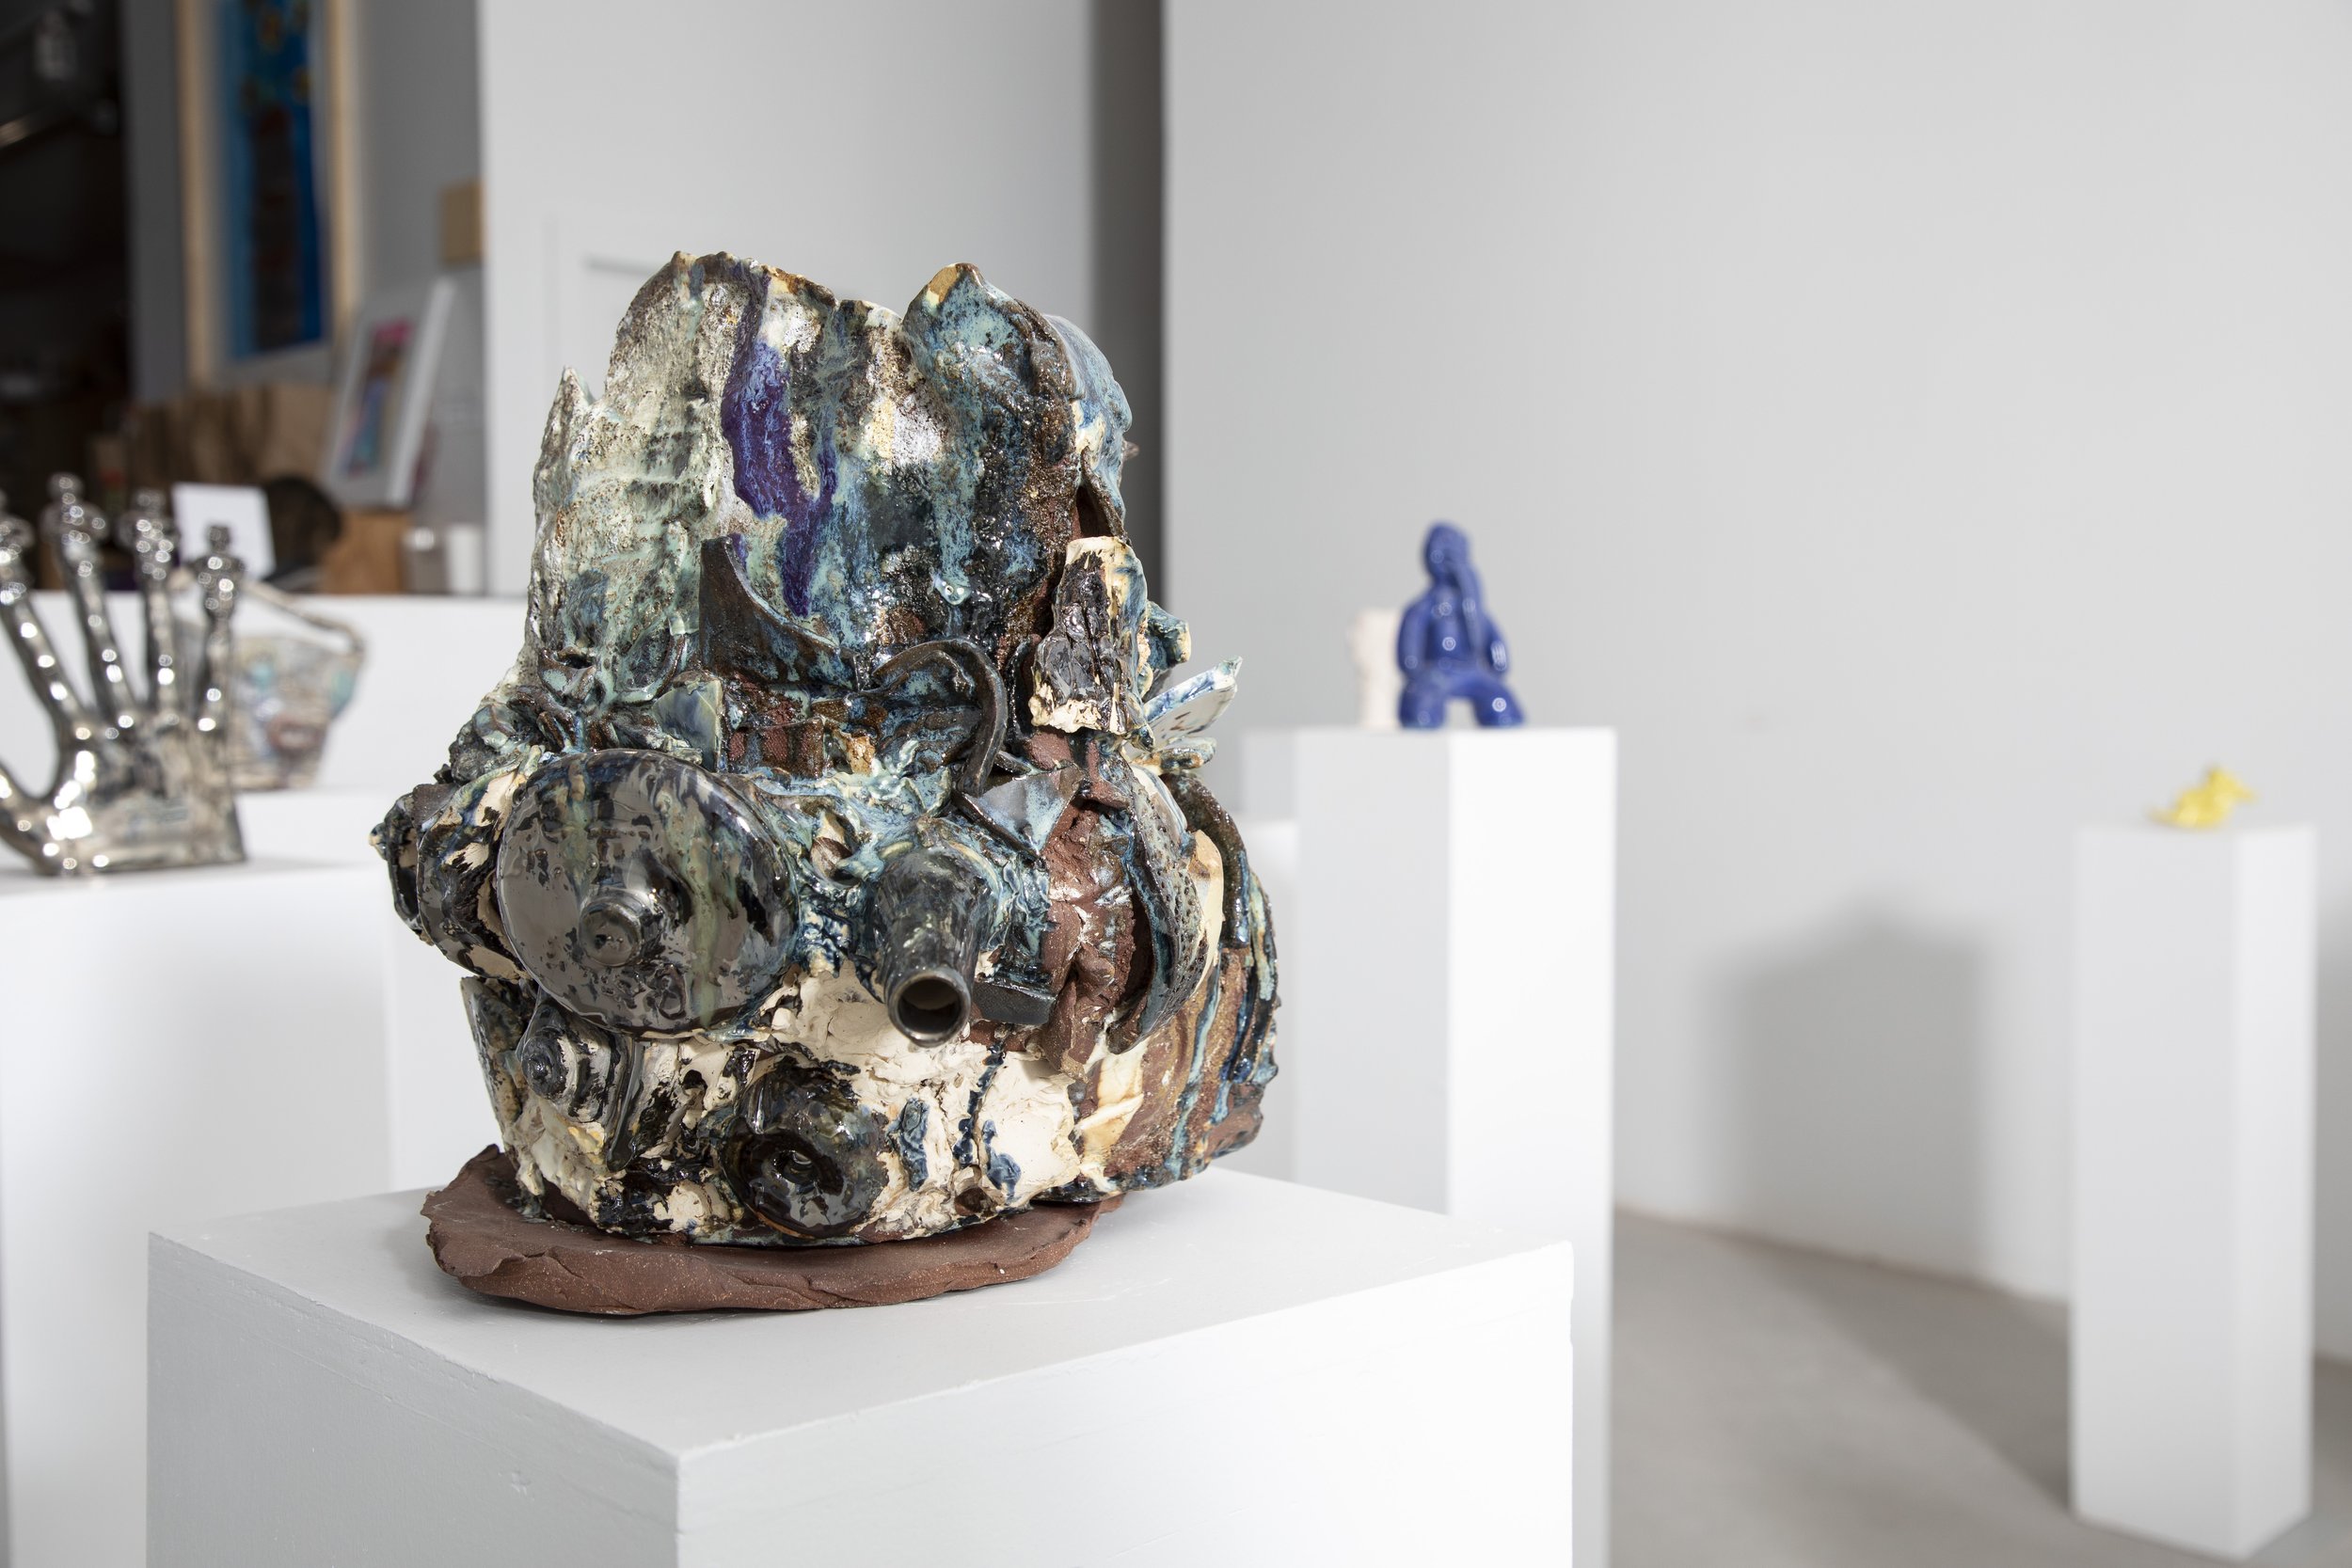  Installation view of “Amok” (IV), Artshack Gallery, ceramic sculpture, dimensions variable, 2022 